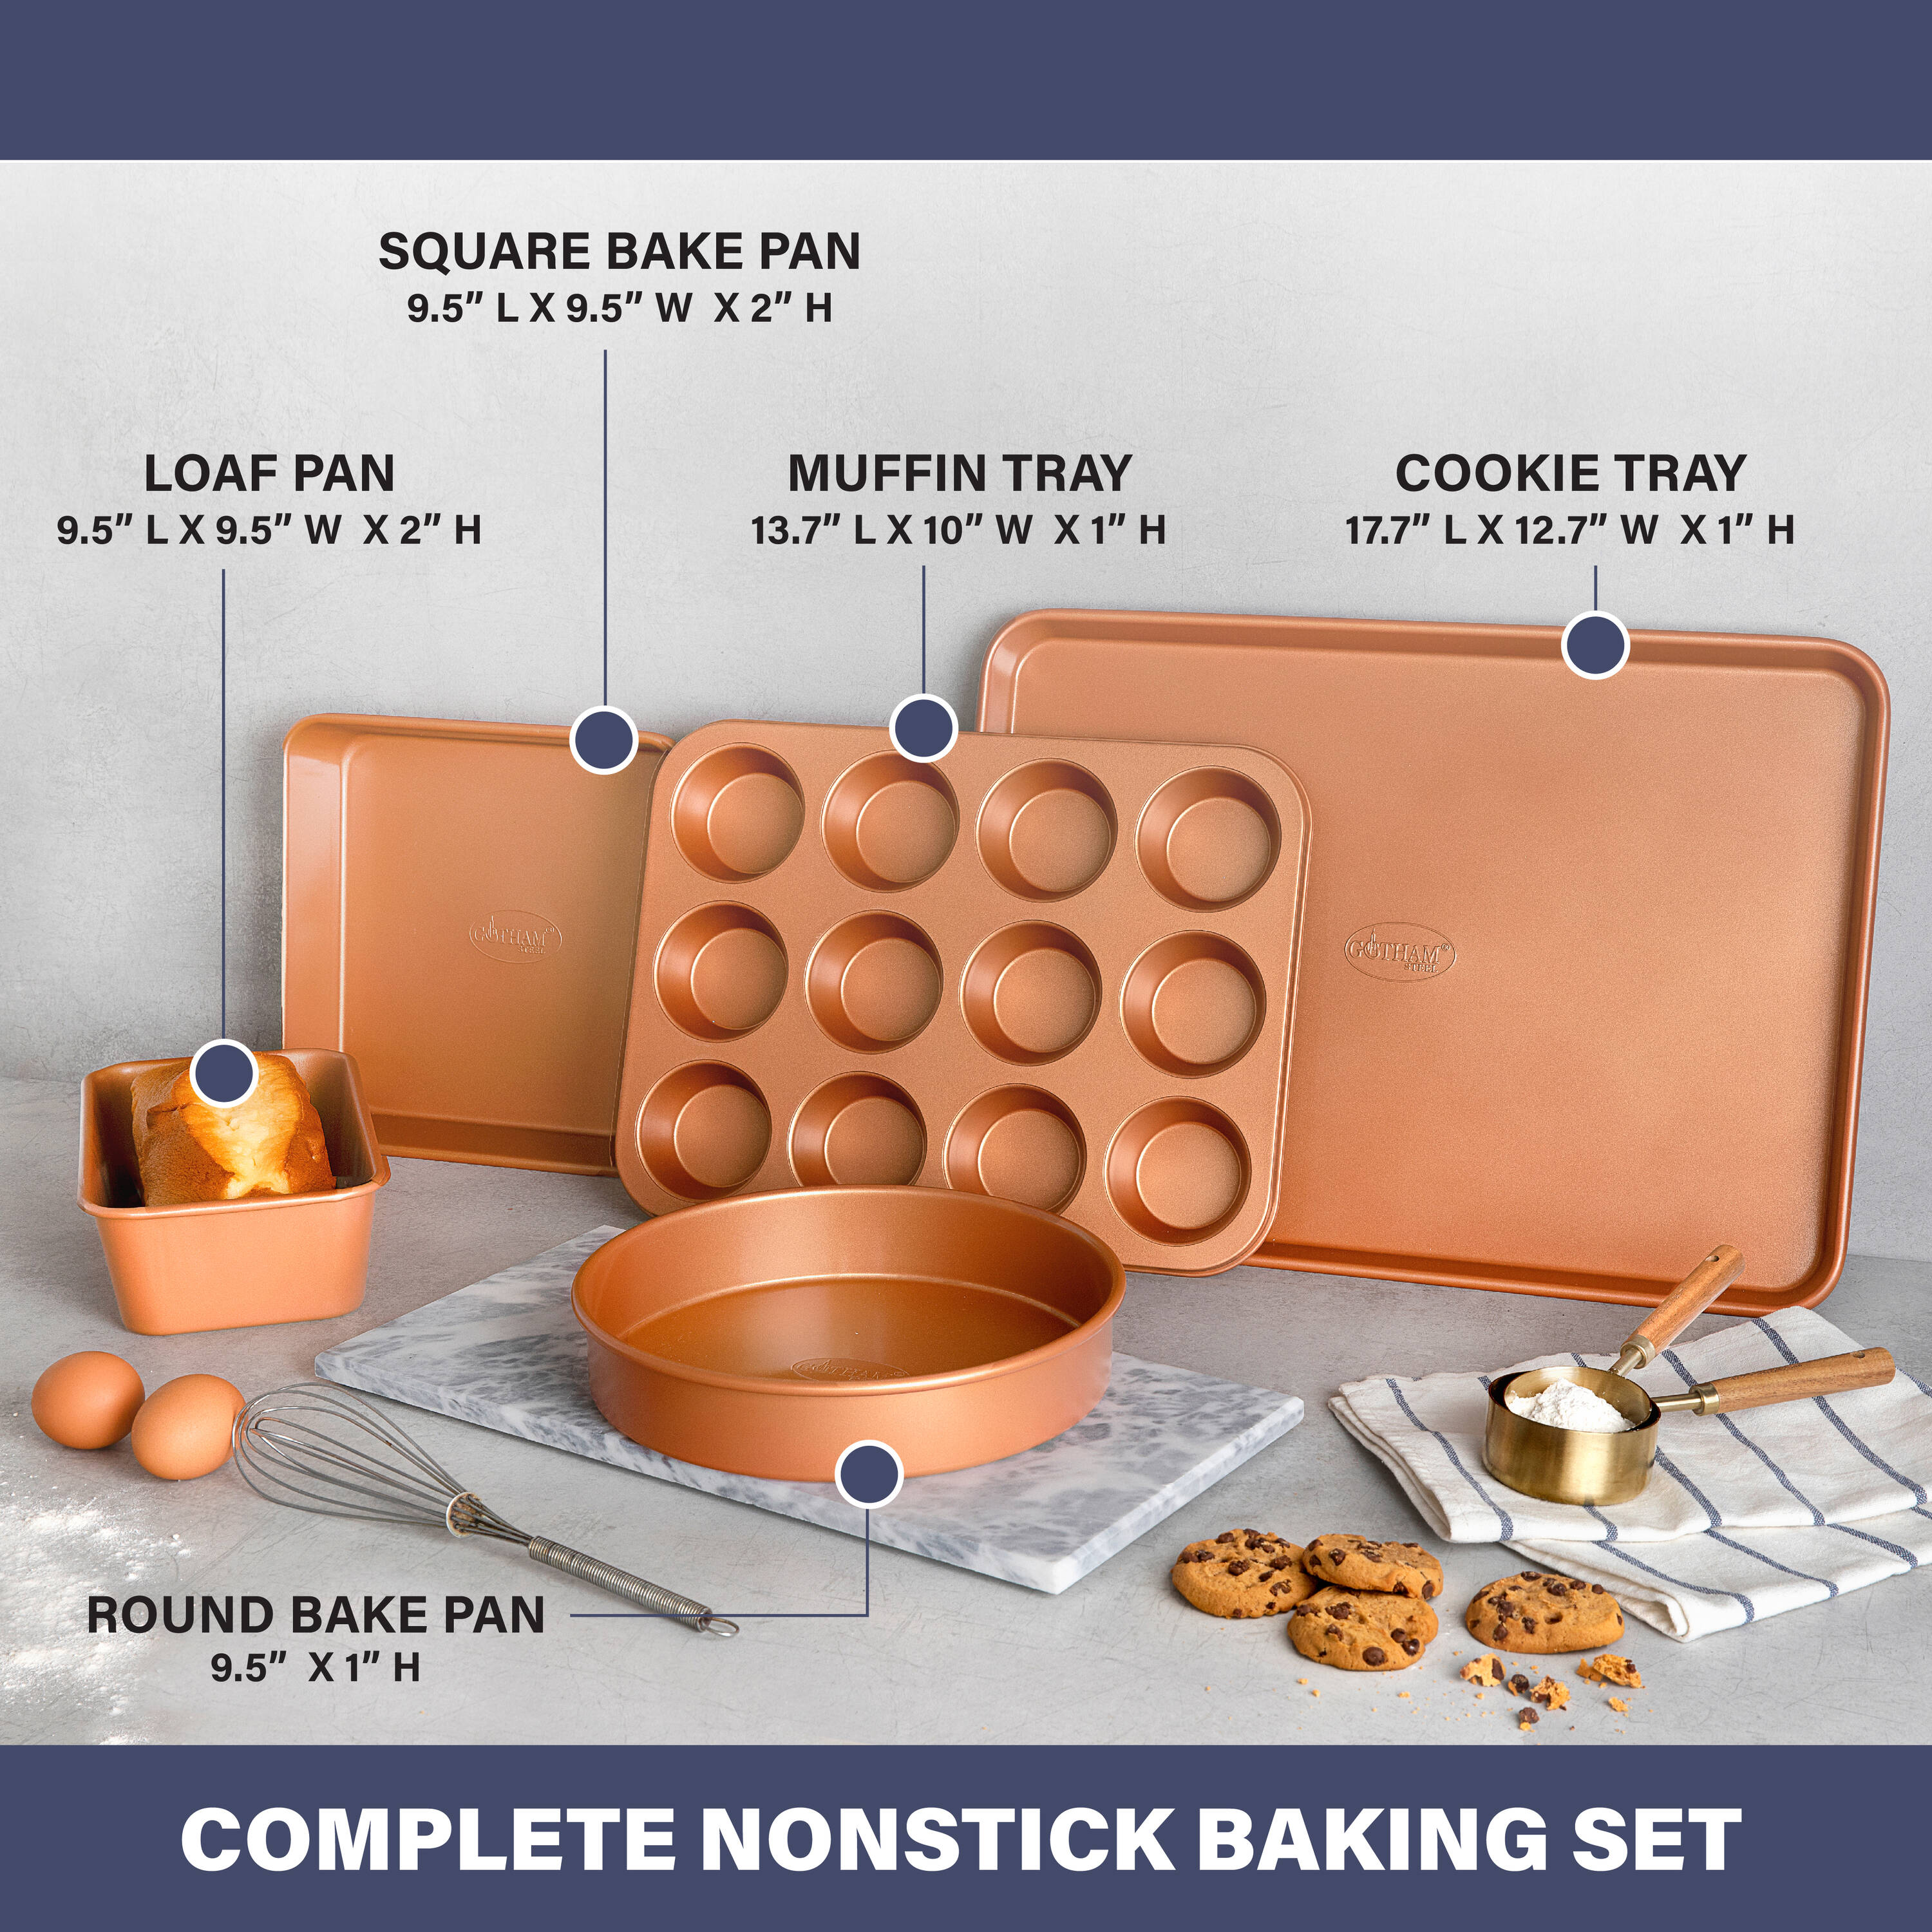 Gotham Steel Non-Stick Cookie Sheet Baking Pan, 12 x 17